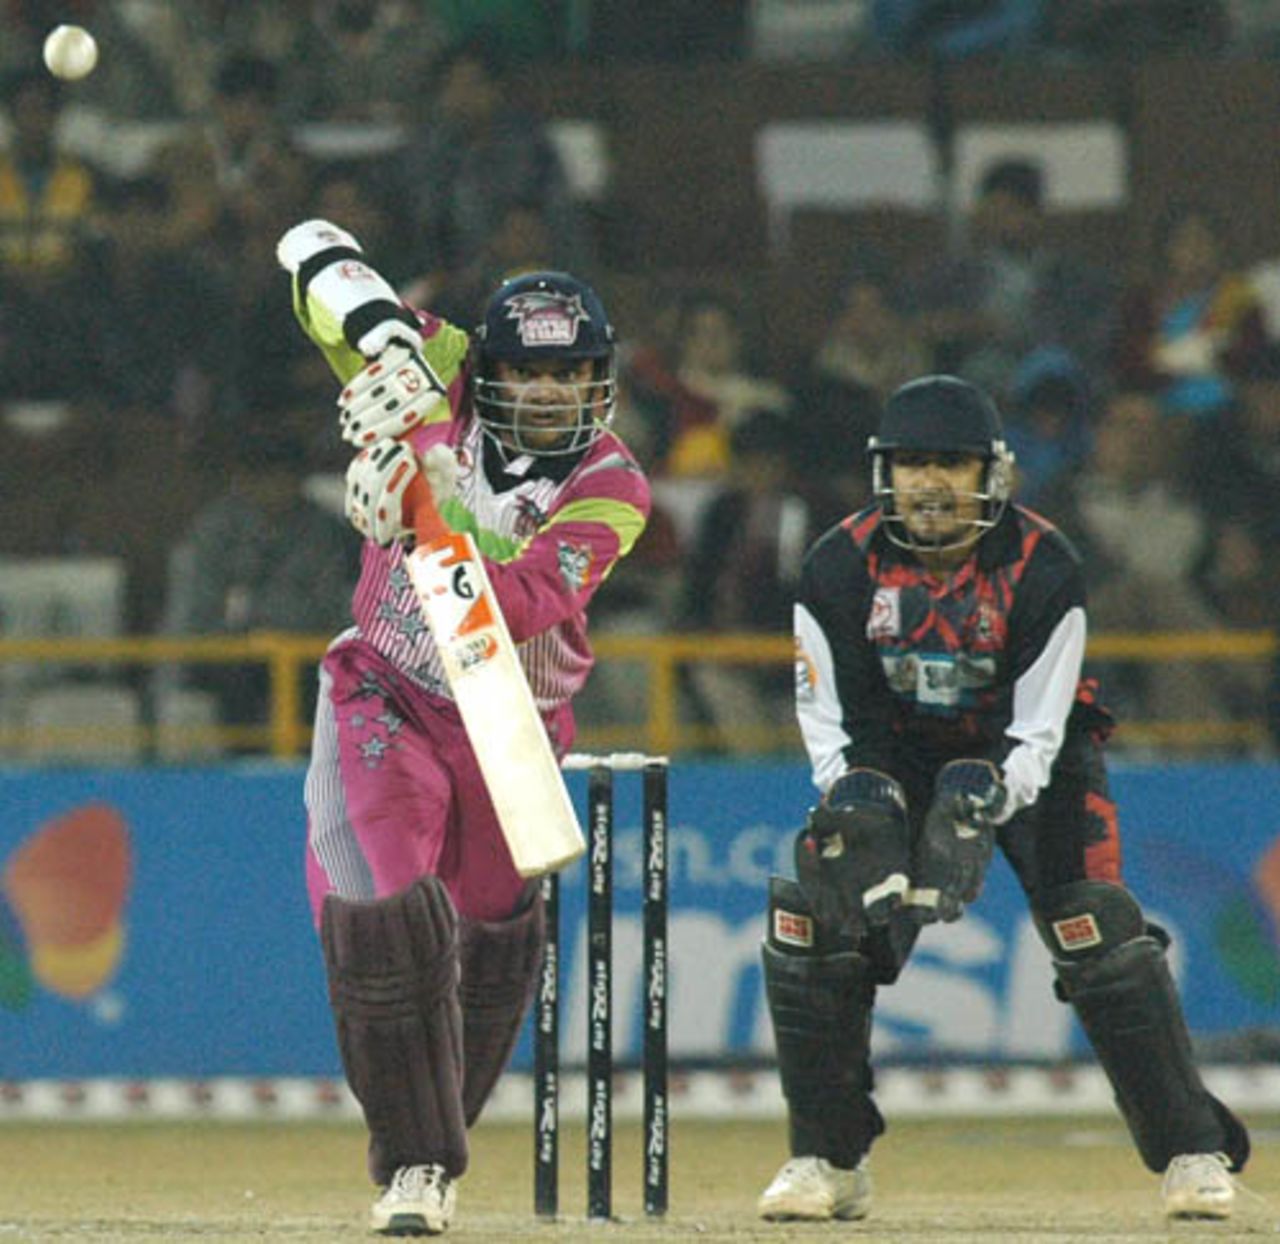 Hemang Badani scored a run-a-ball 15 for the Superstars, Chennai Superstars v Kolkata Tigers, 1st semi-final, Indian Cricket League, Panchkula, December 14, 2007